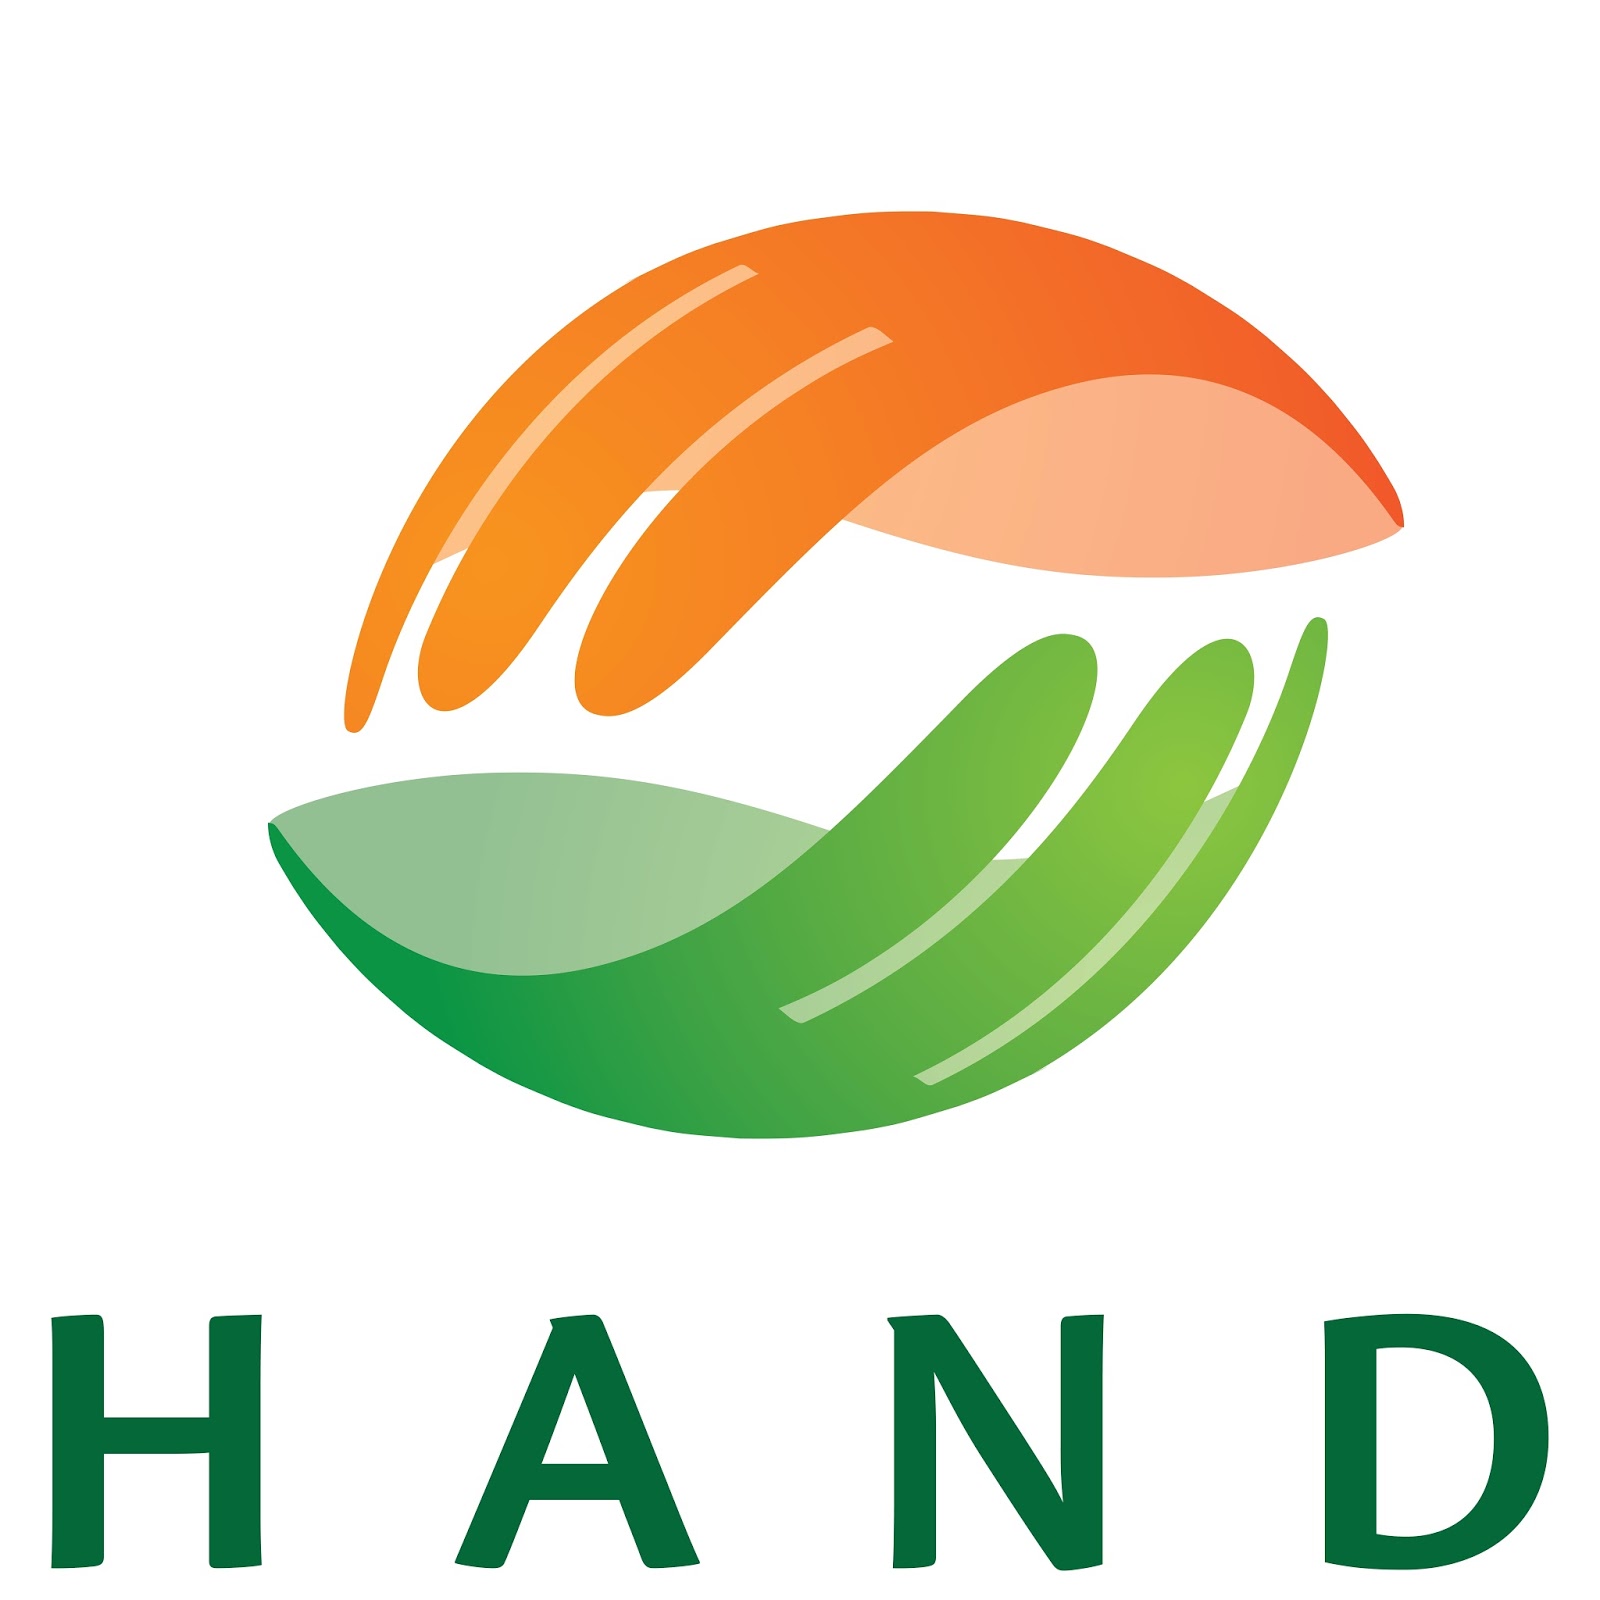 Helping Hand Logo 59844 | DFILES